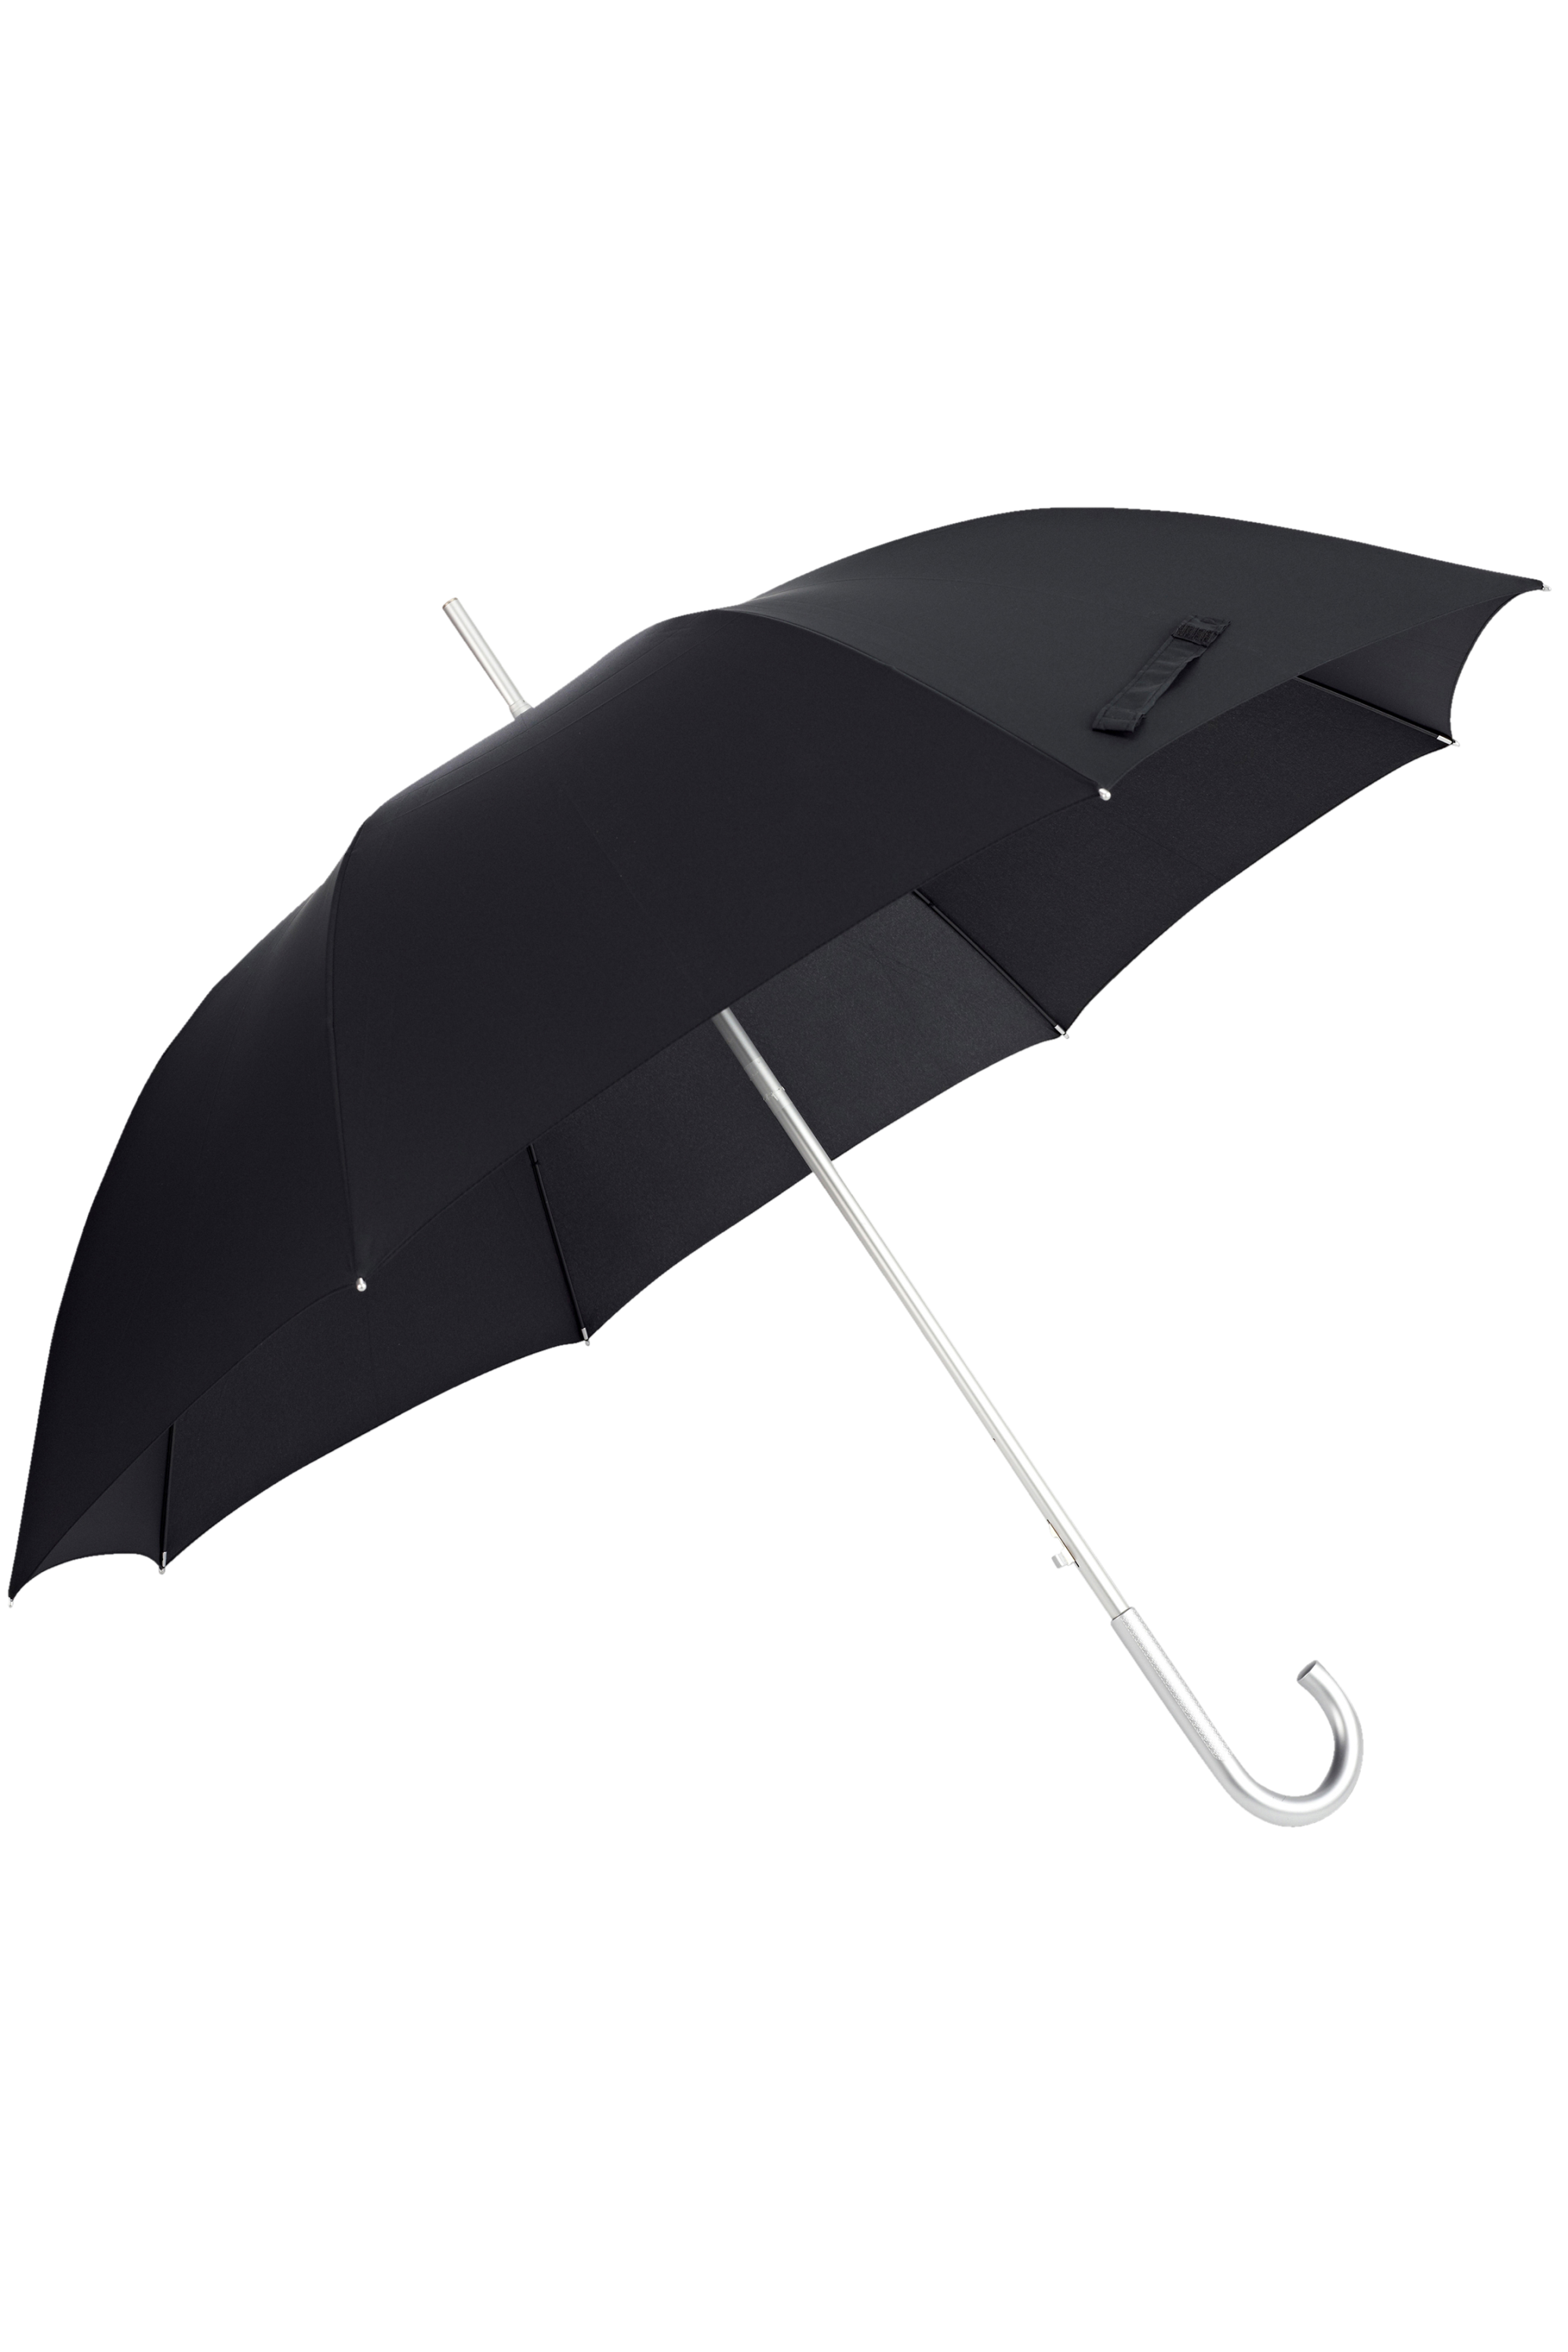 Noir Visiter la boutique SamsoniteSAMSONITE Alu Drop S 23 cm Black Man Auto Open Parapluie Canne 